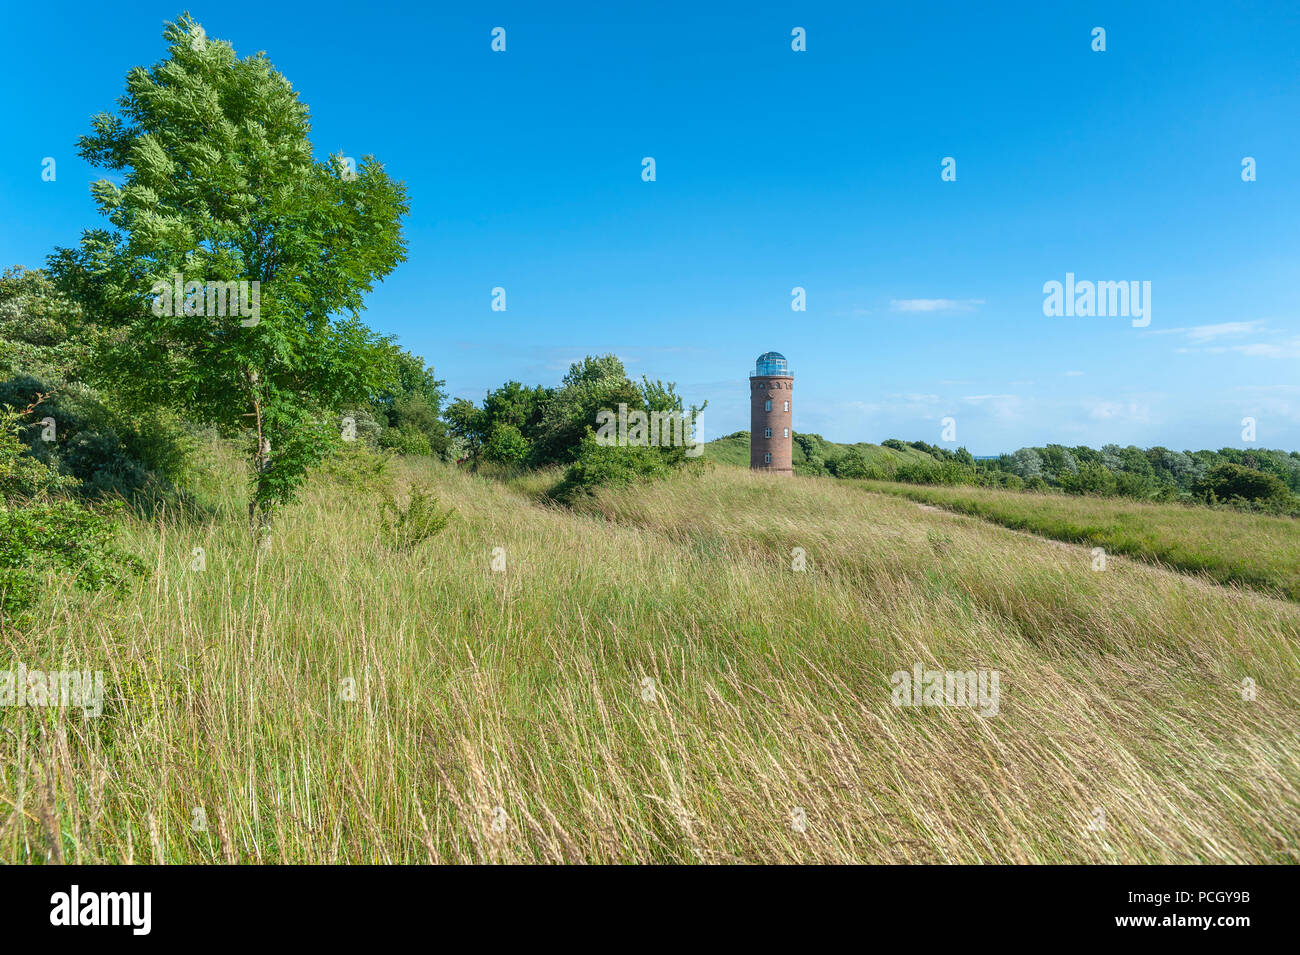 Landscape with former Marinepeilturm tower at Cape Arkona, Putgarten, Rügen, Mecklenburg-Vorpommern, Germany, Europe Stock Photo